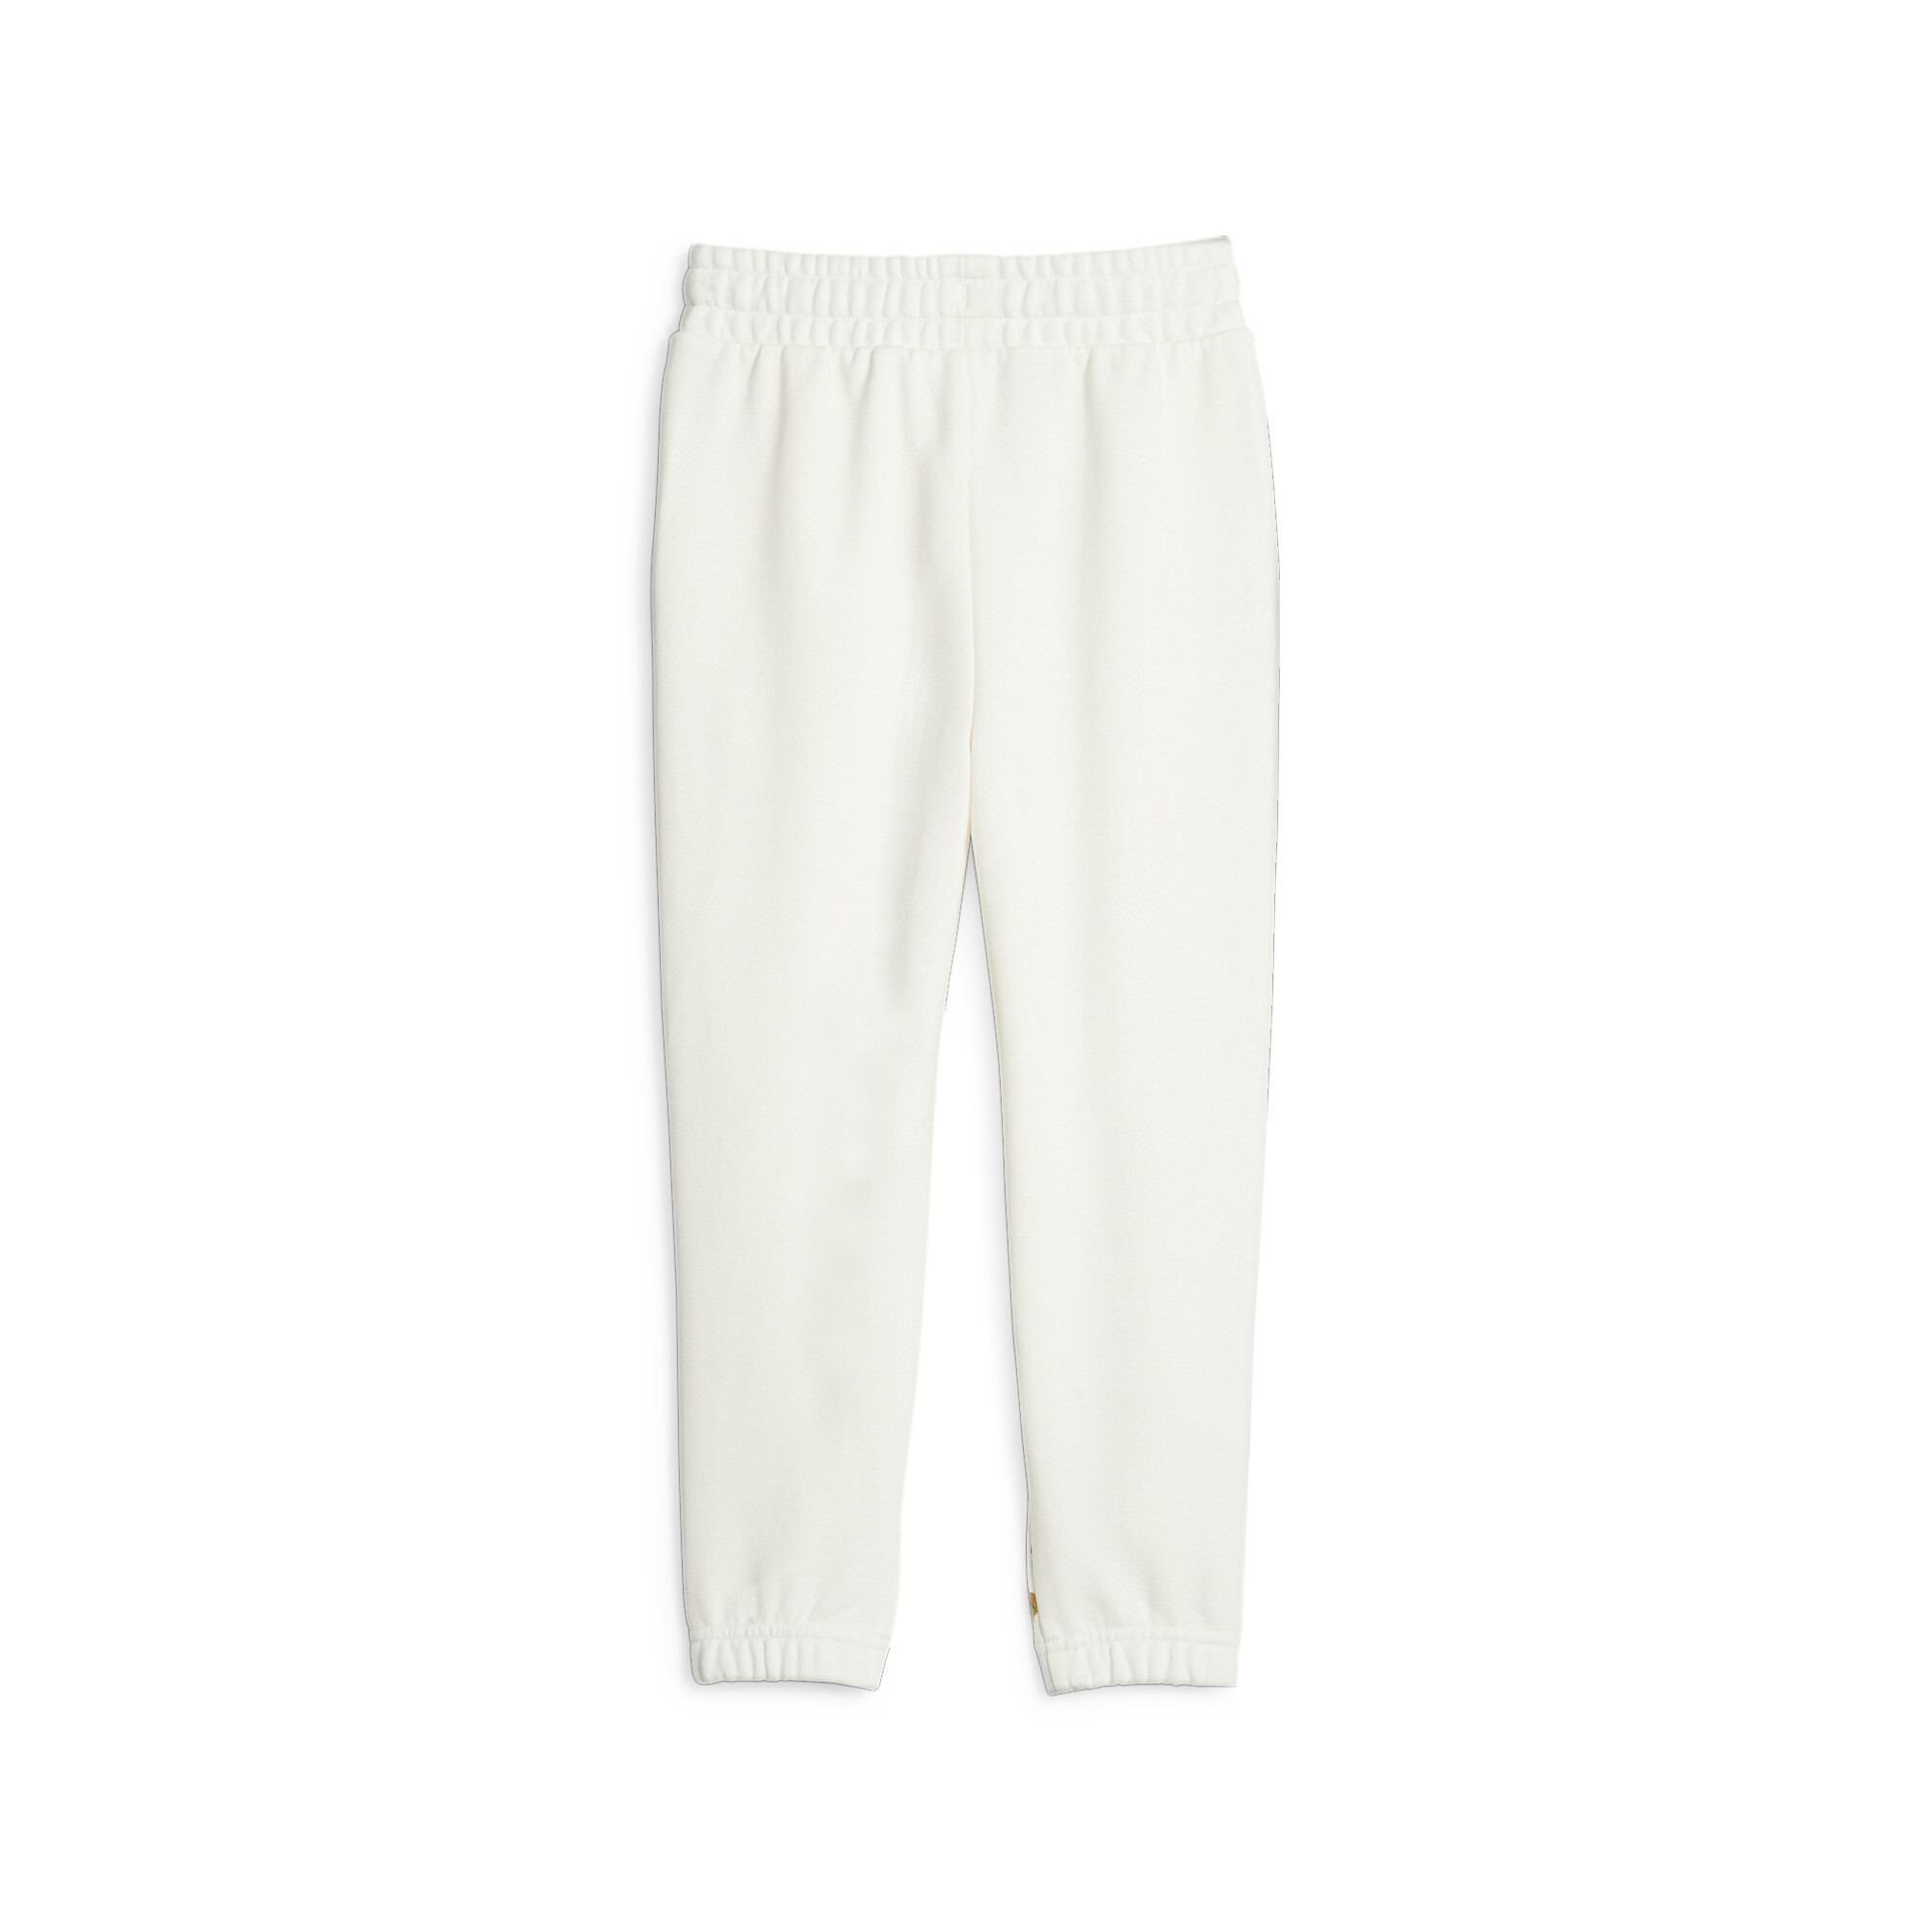 PUMA X LIBERTY Sweatpants In White, Size 7-8 Youth